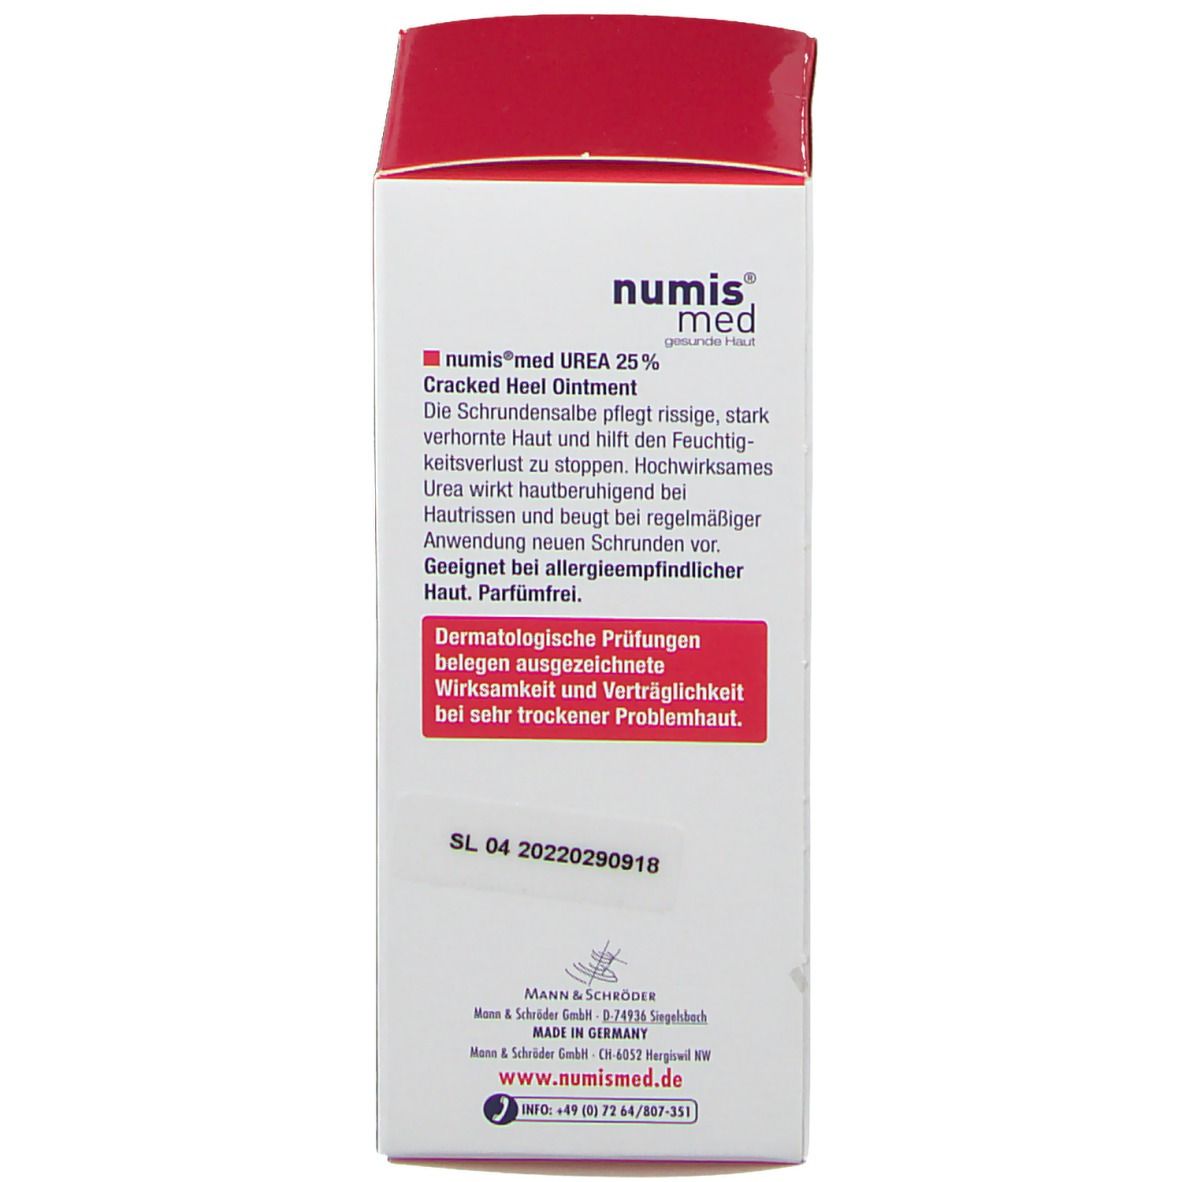 numis® med UREA 25% Schrundensalbe